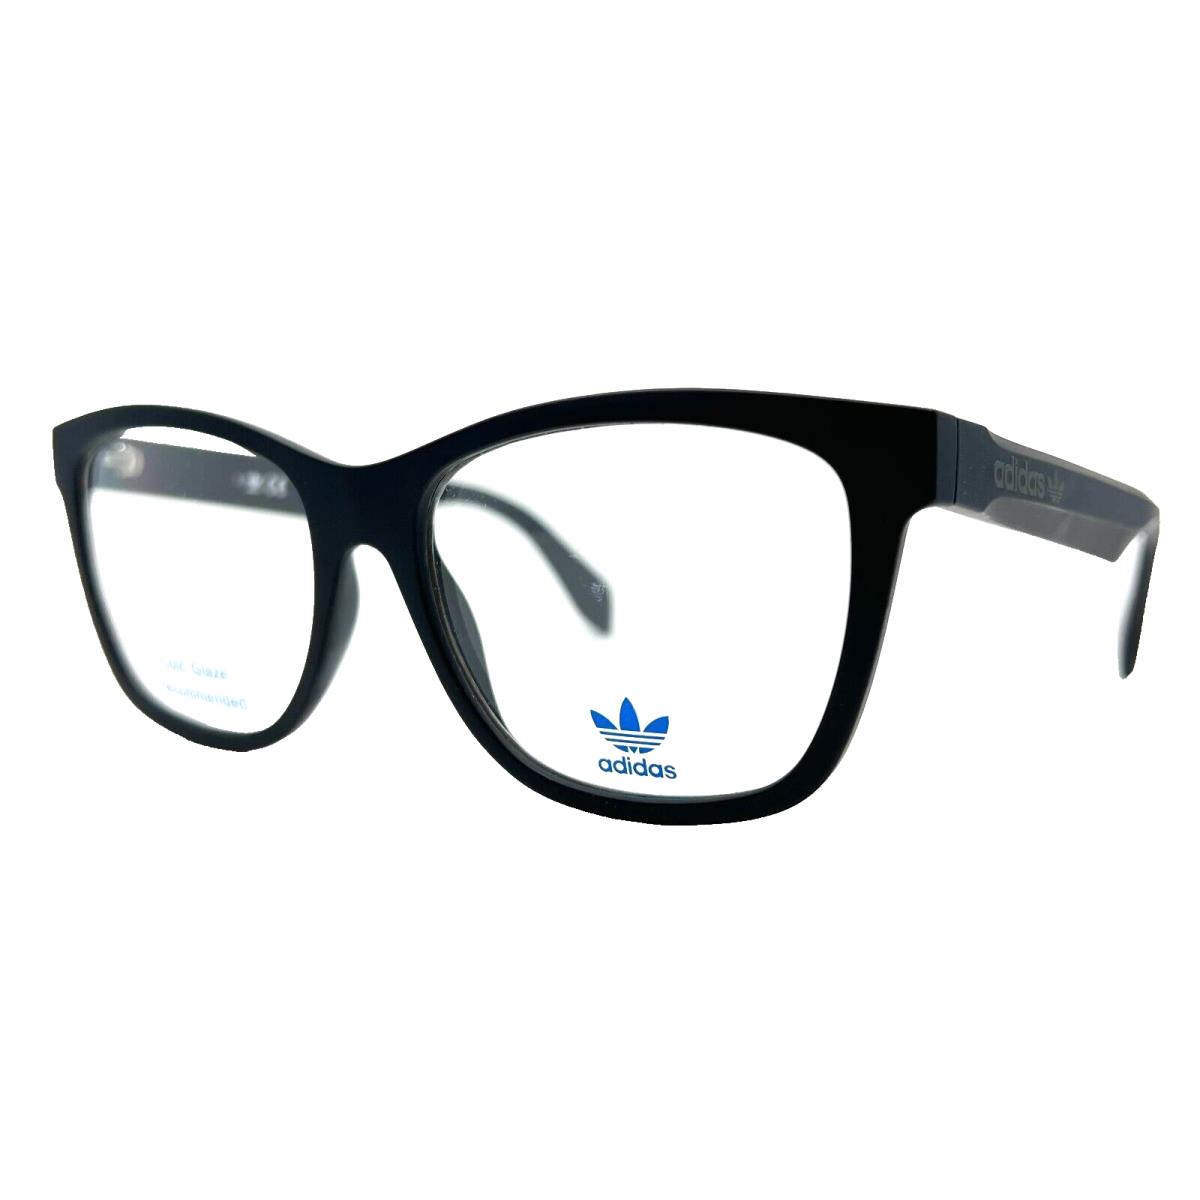 Adidas Originals - OR5025 002 54/16/145 - Black Eyeglasses Case